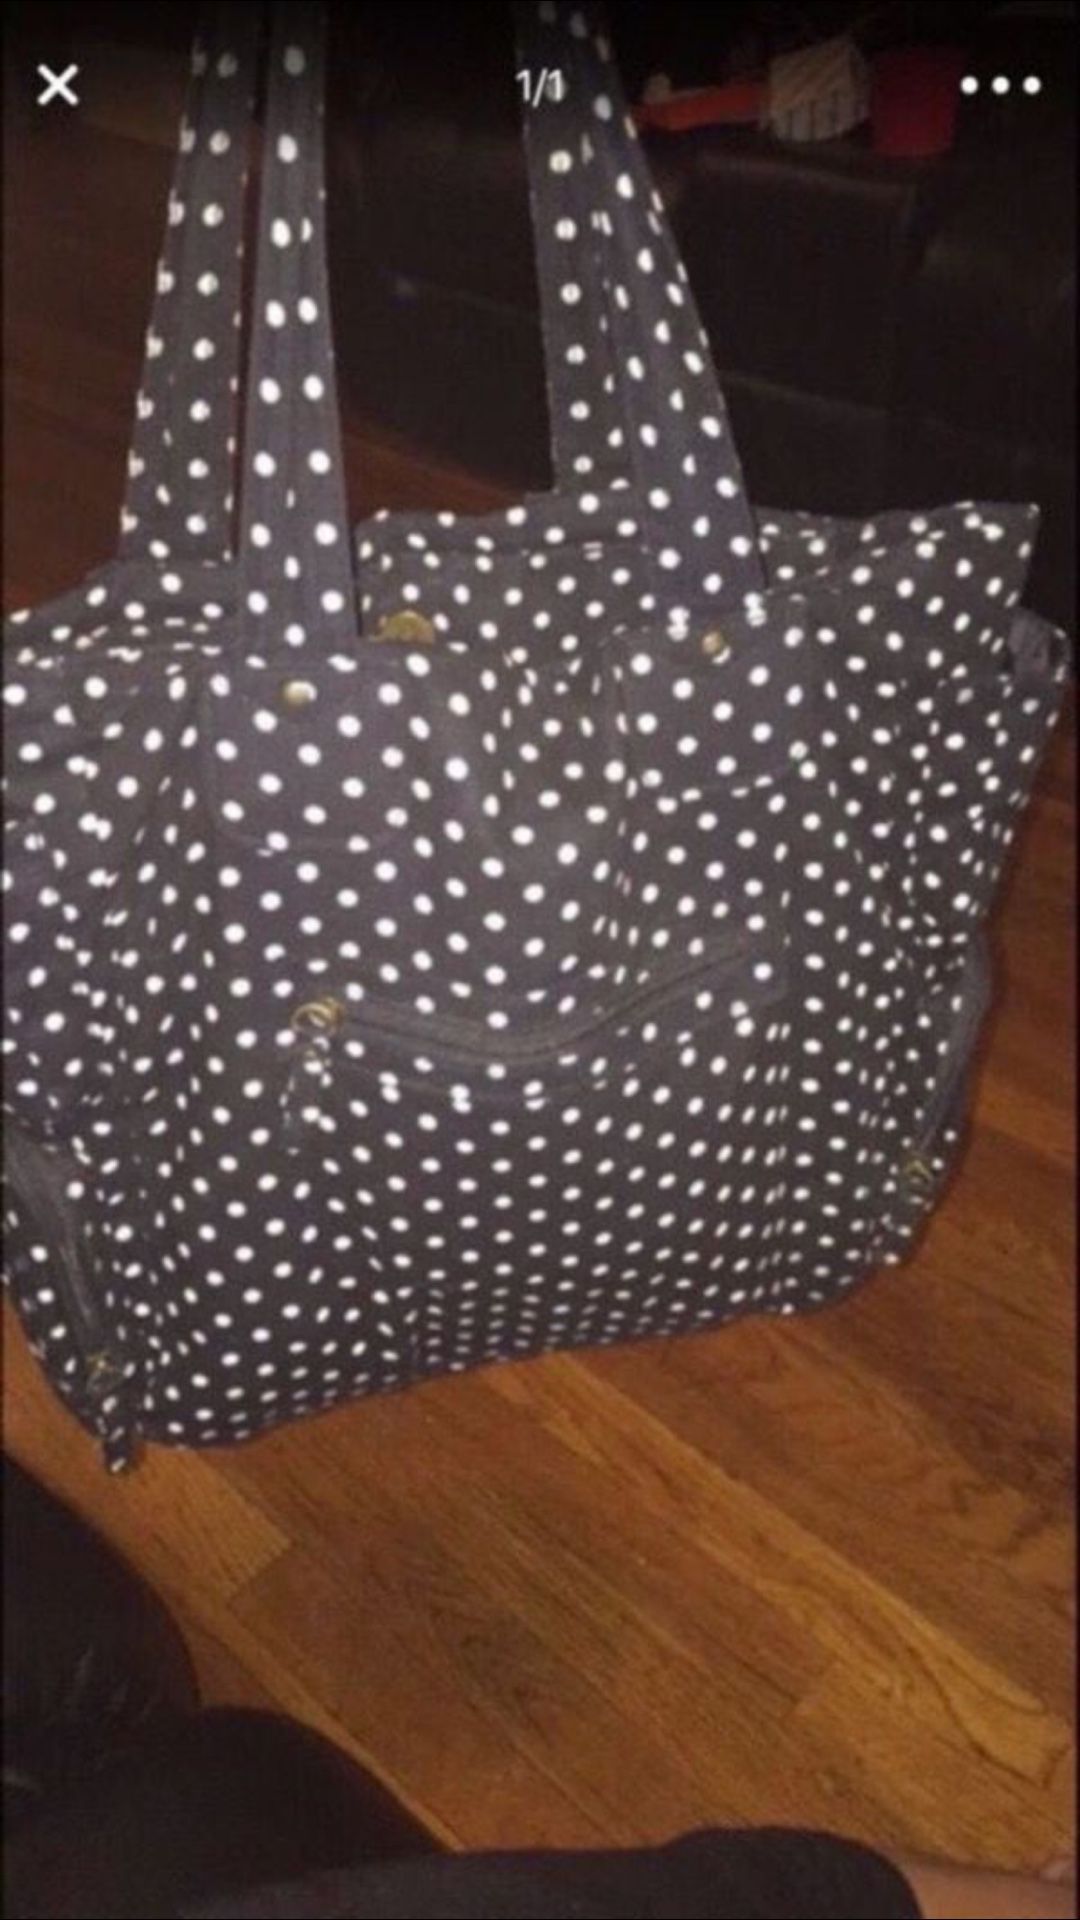 White and black polka-dot tote bag